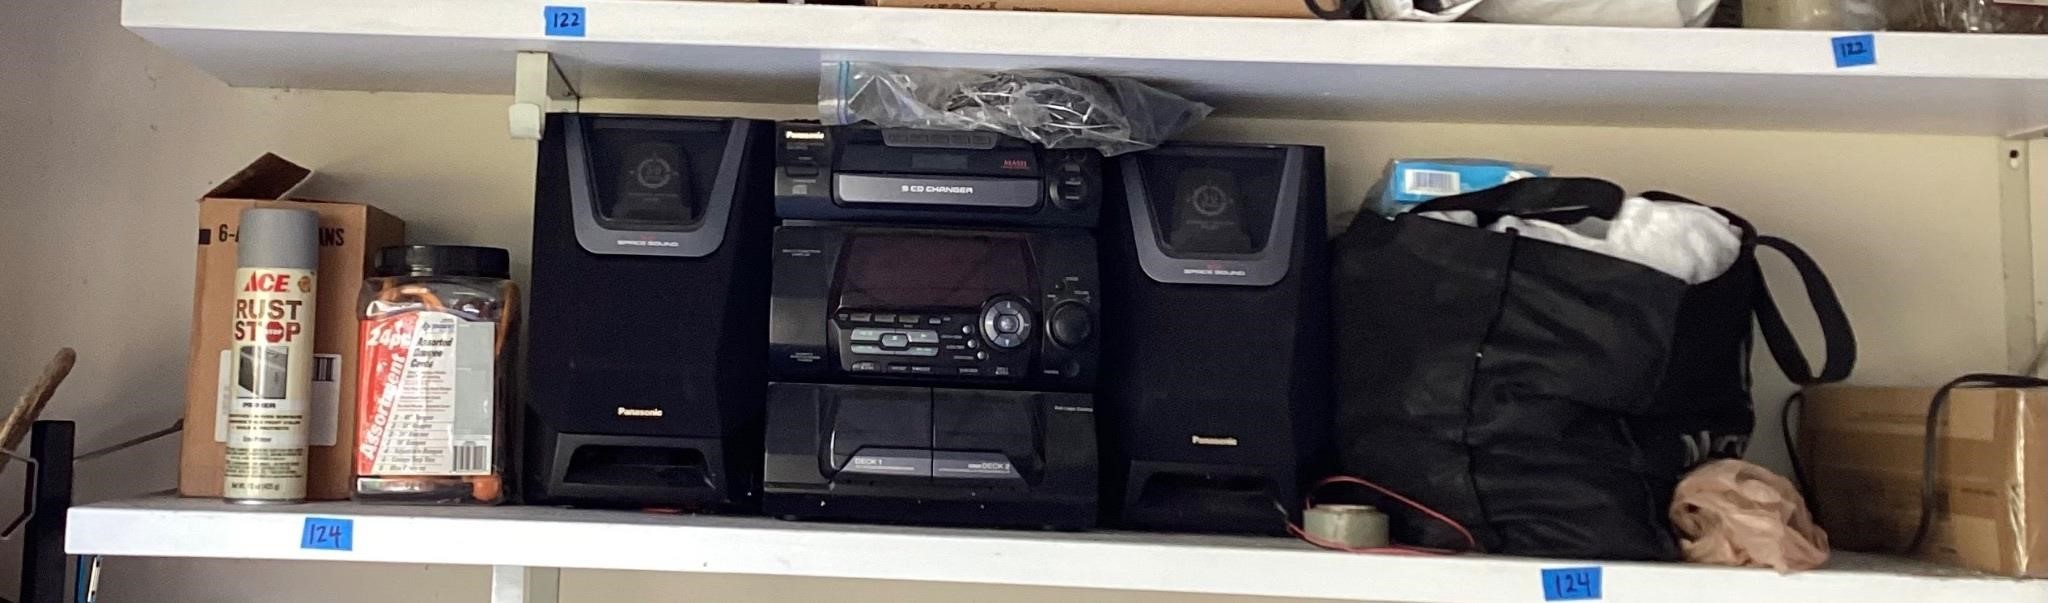 Panasonic stereo system shelf lot